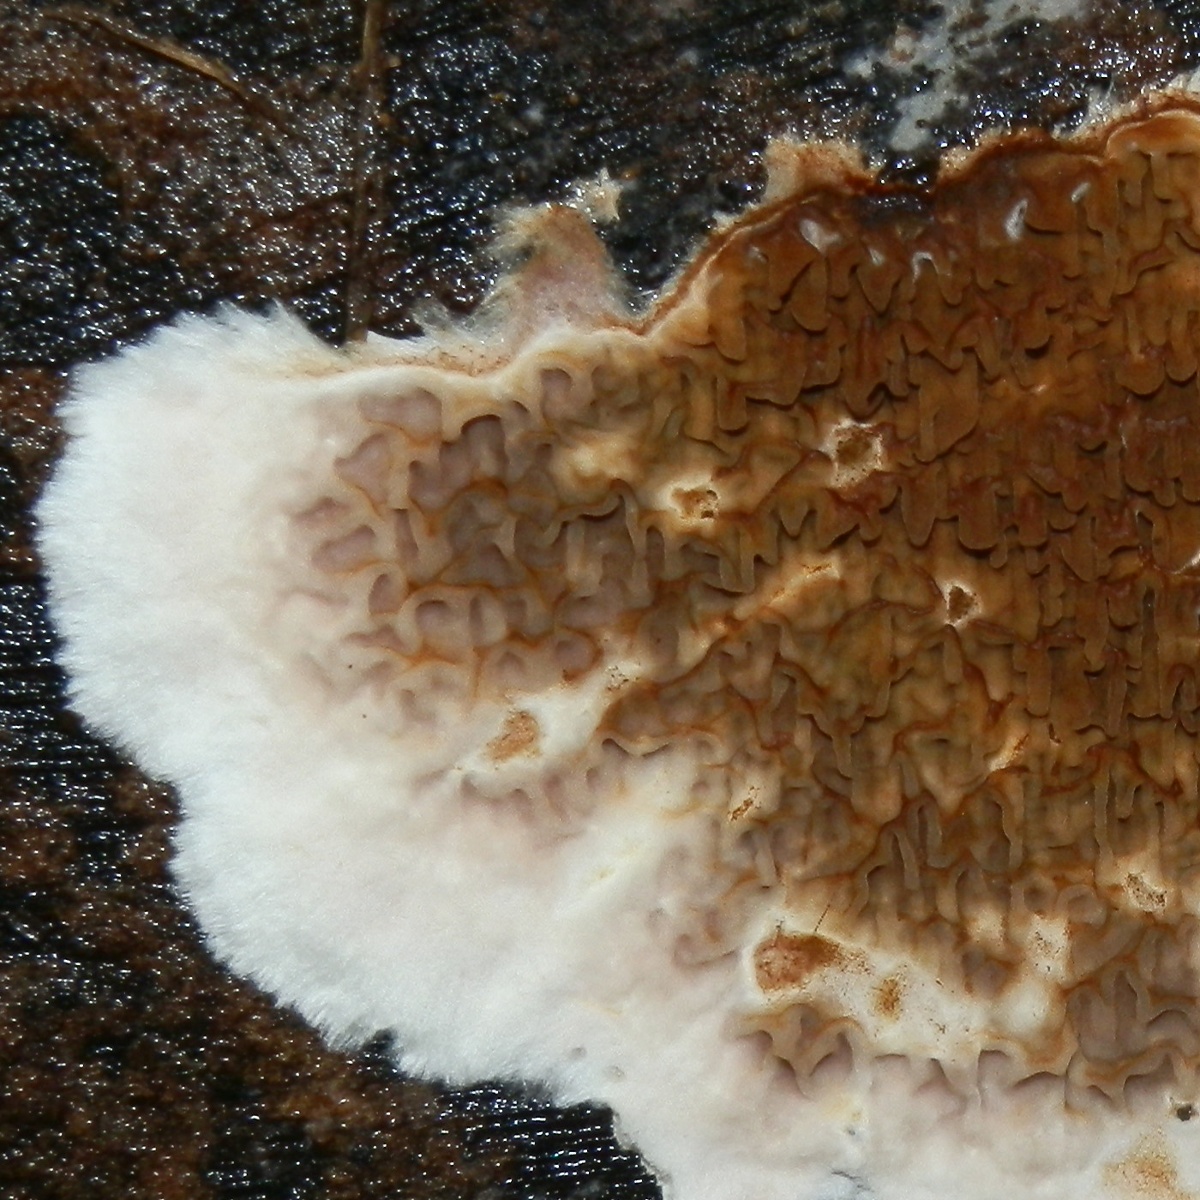 Crust fungus with merulioid folds